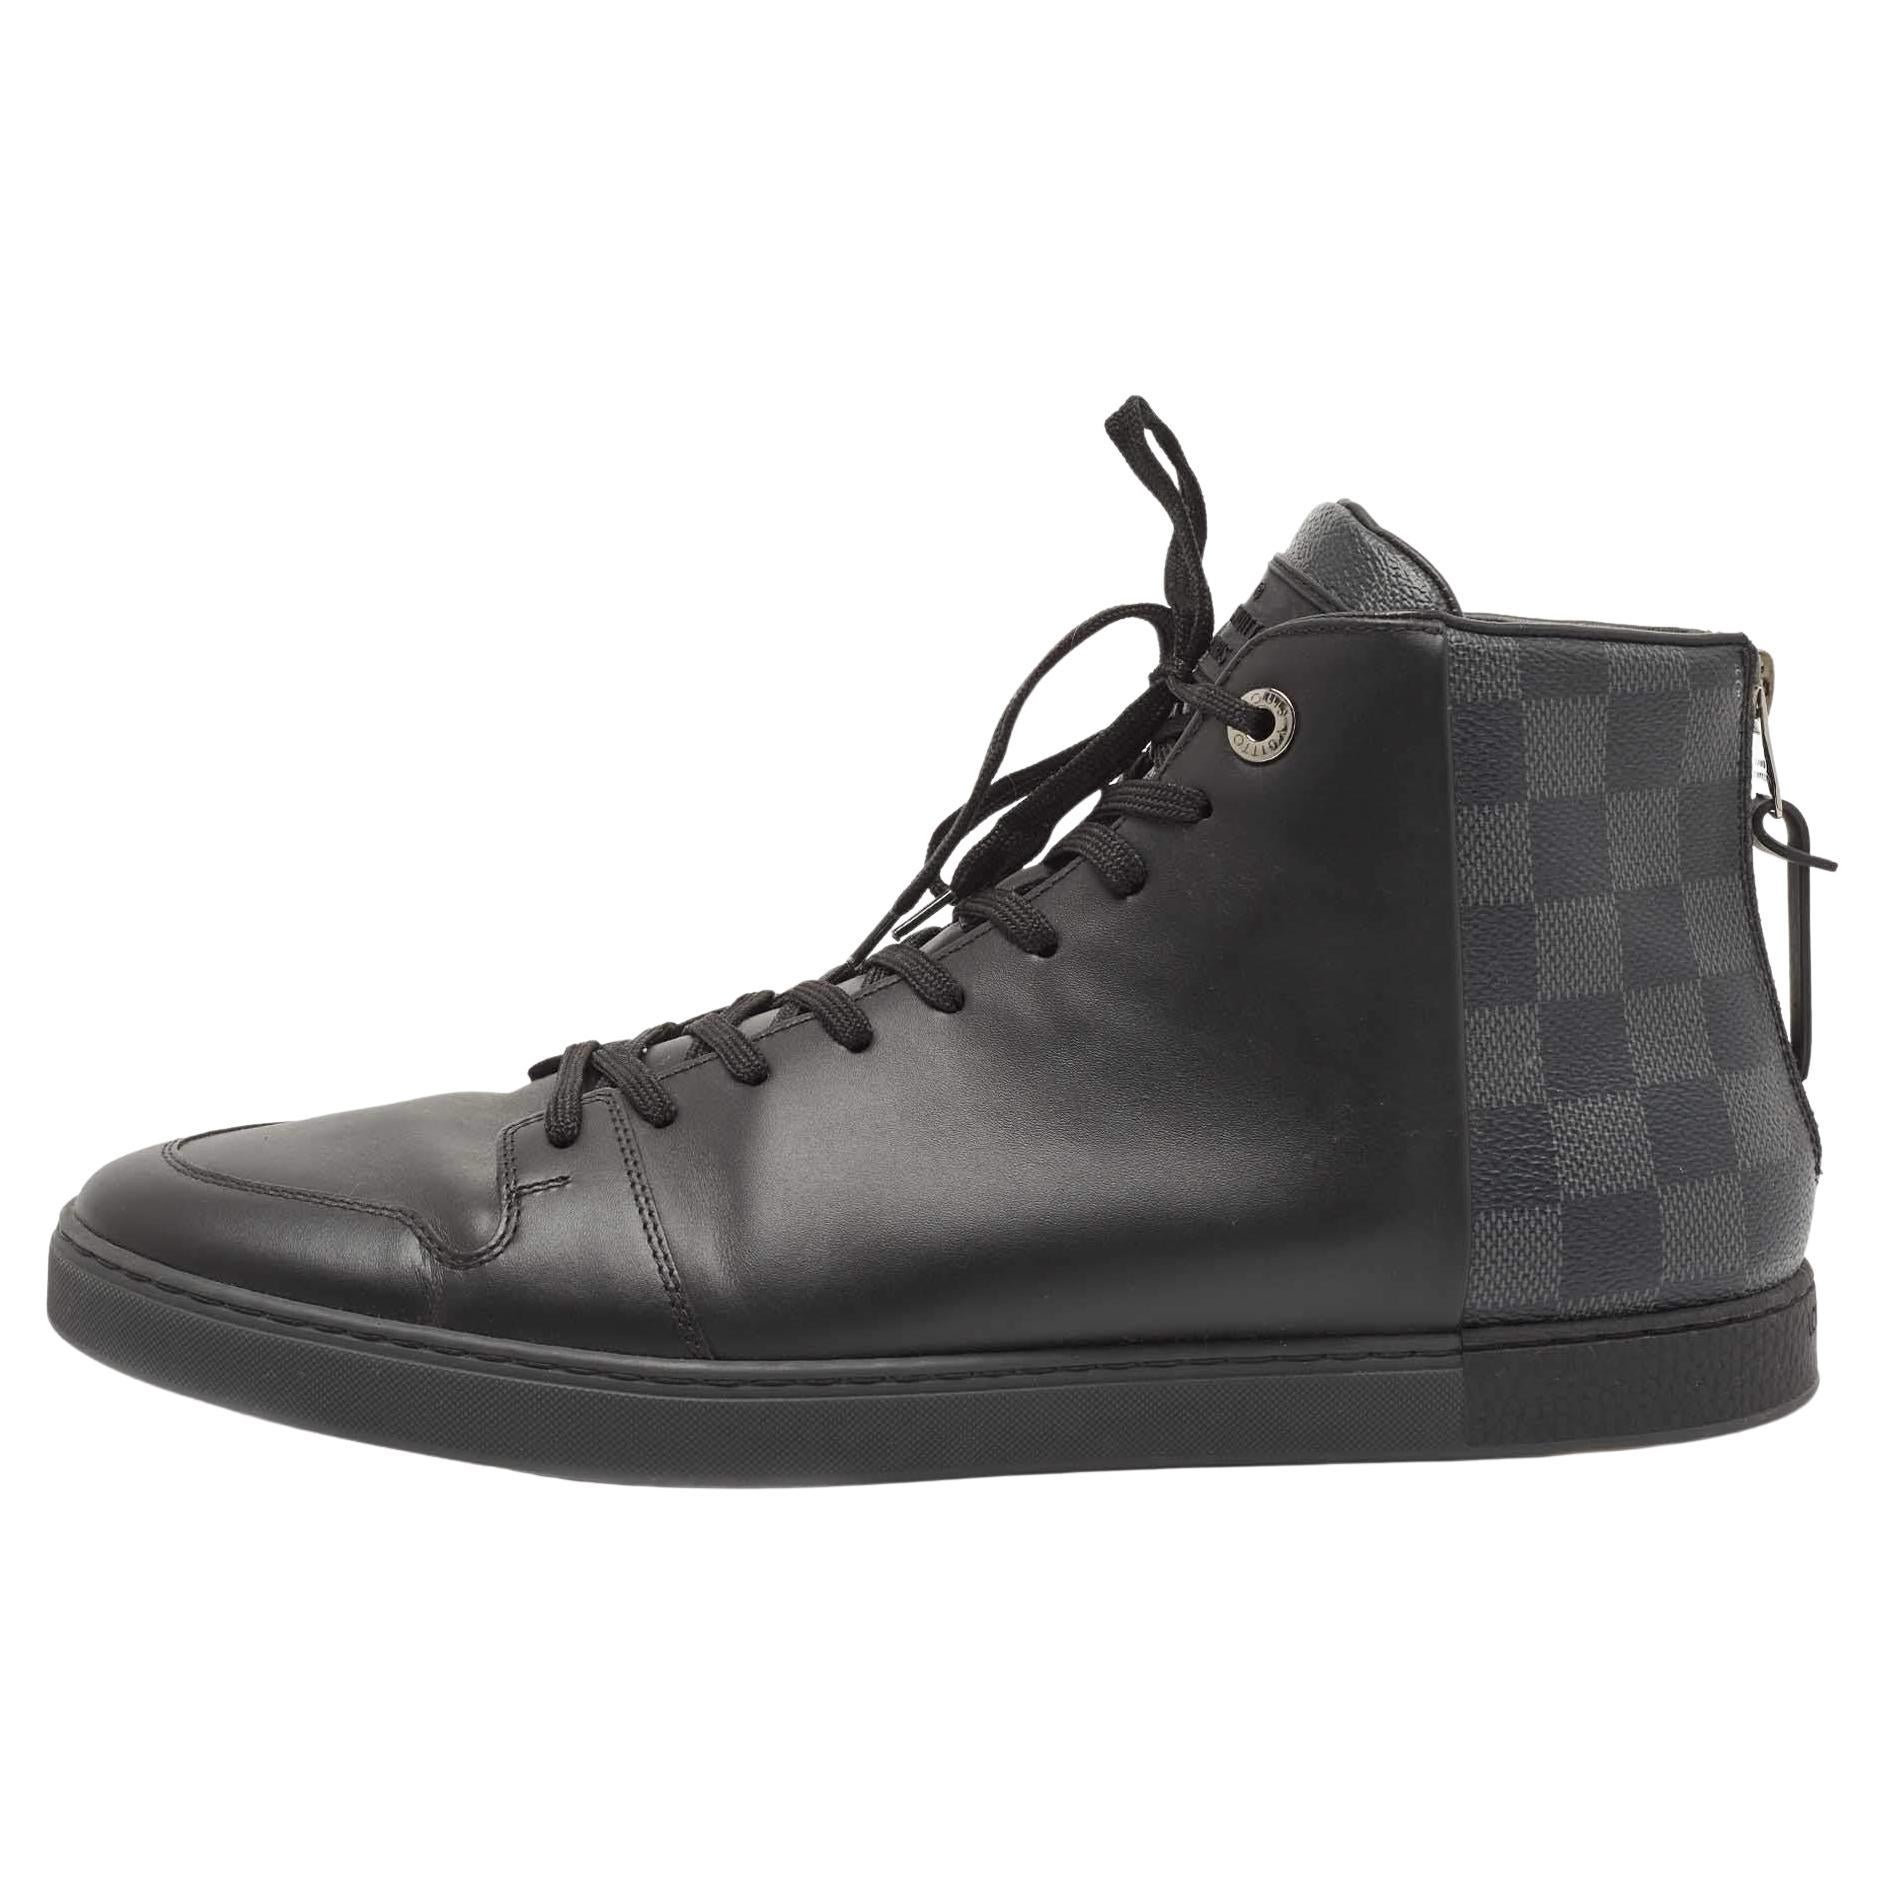 Louis Vuitton Black Leather Damier Graphite Canvas Line Up Sneakers Size 42.5